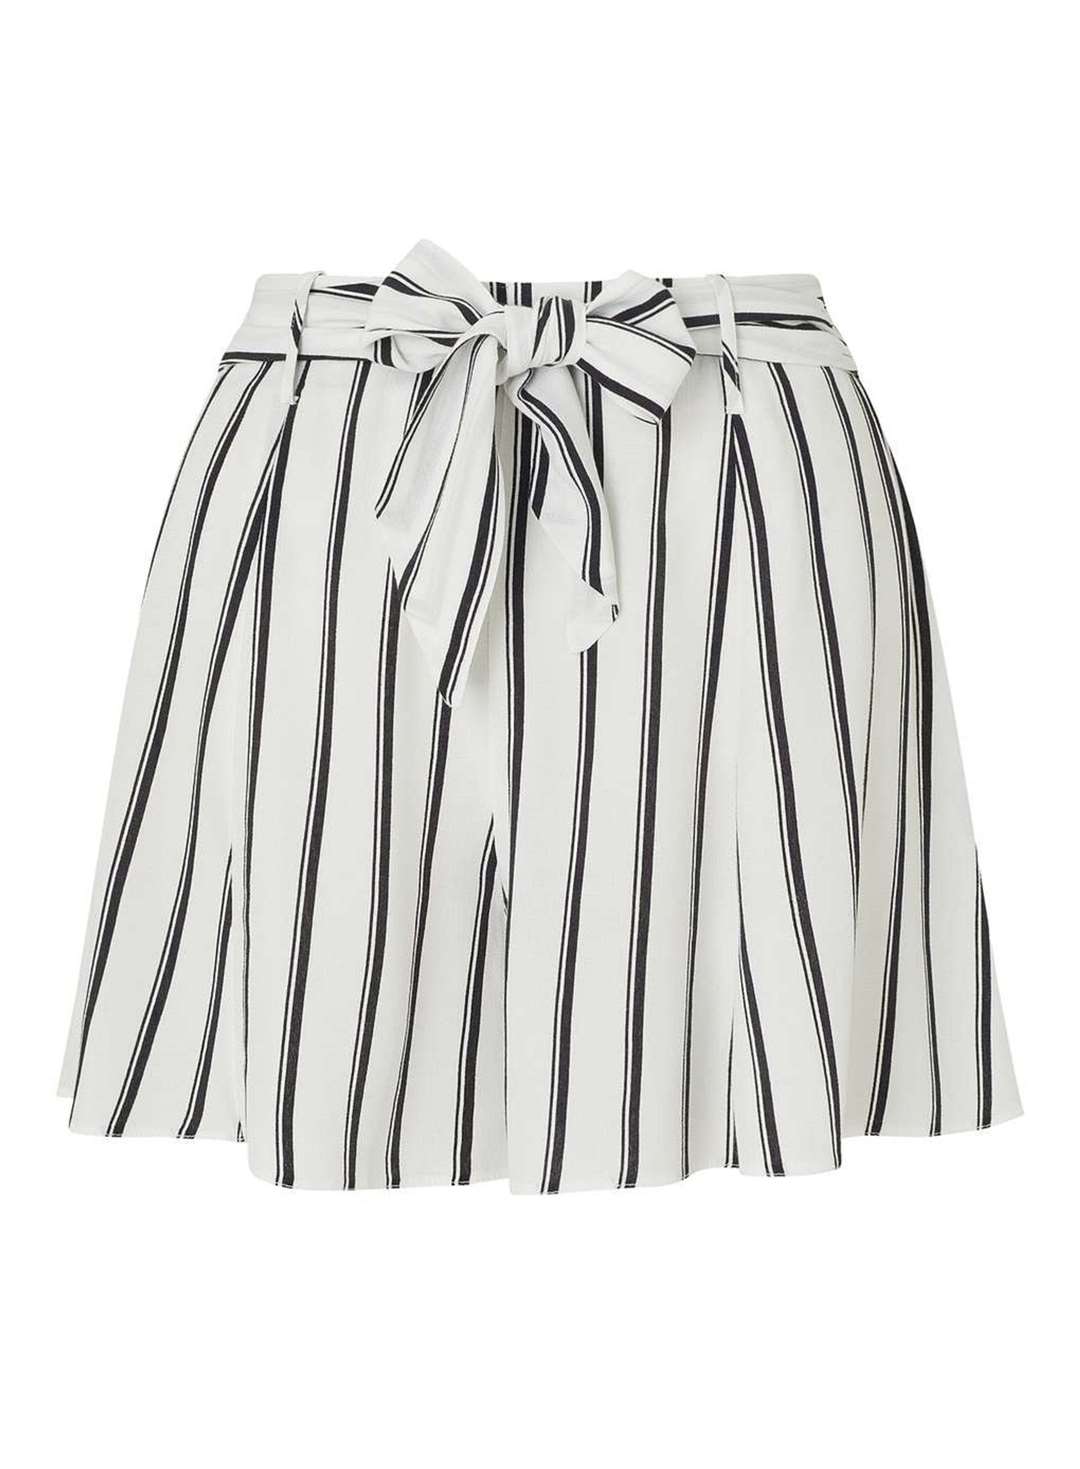 Miss Selfridge Stripe Flippy Shorts, £25